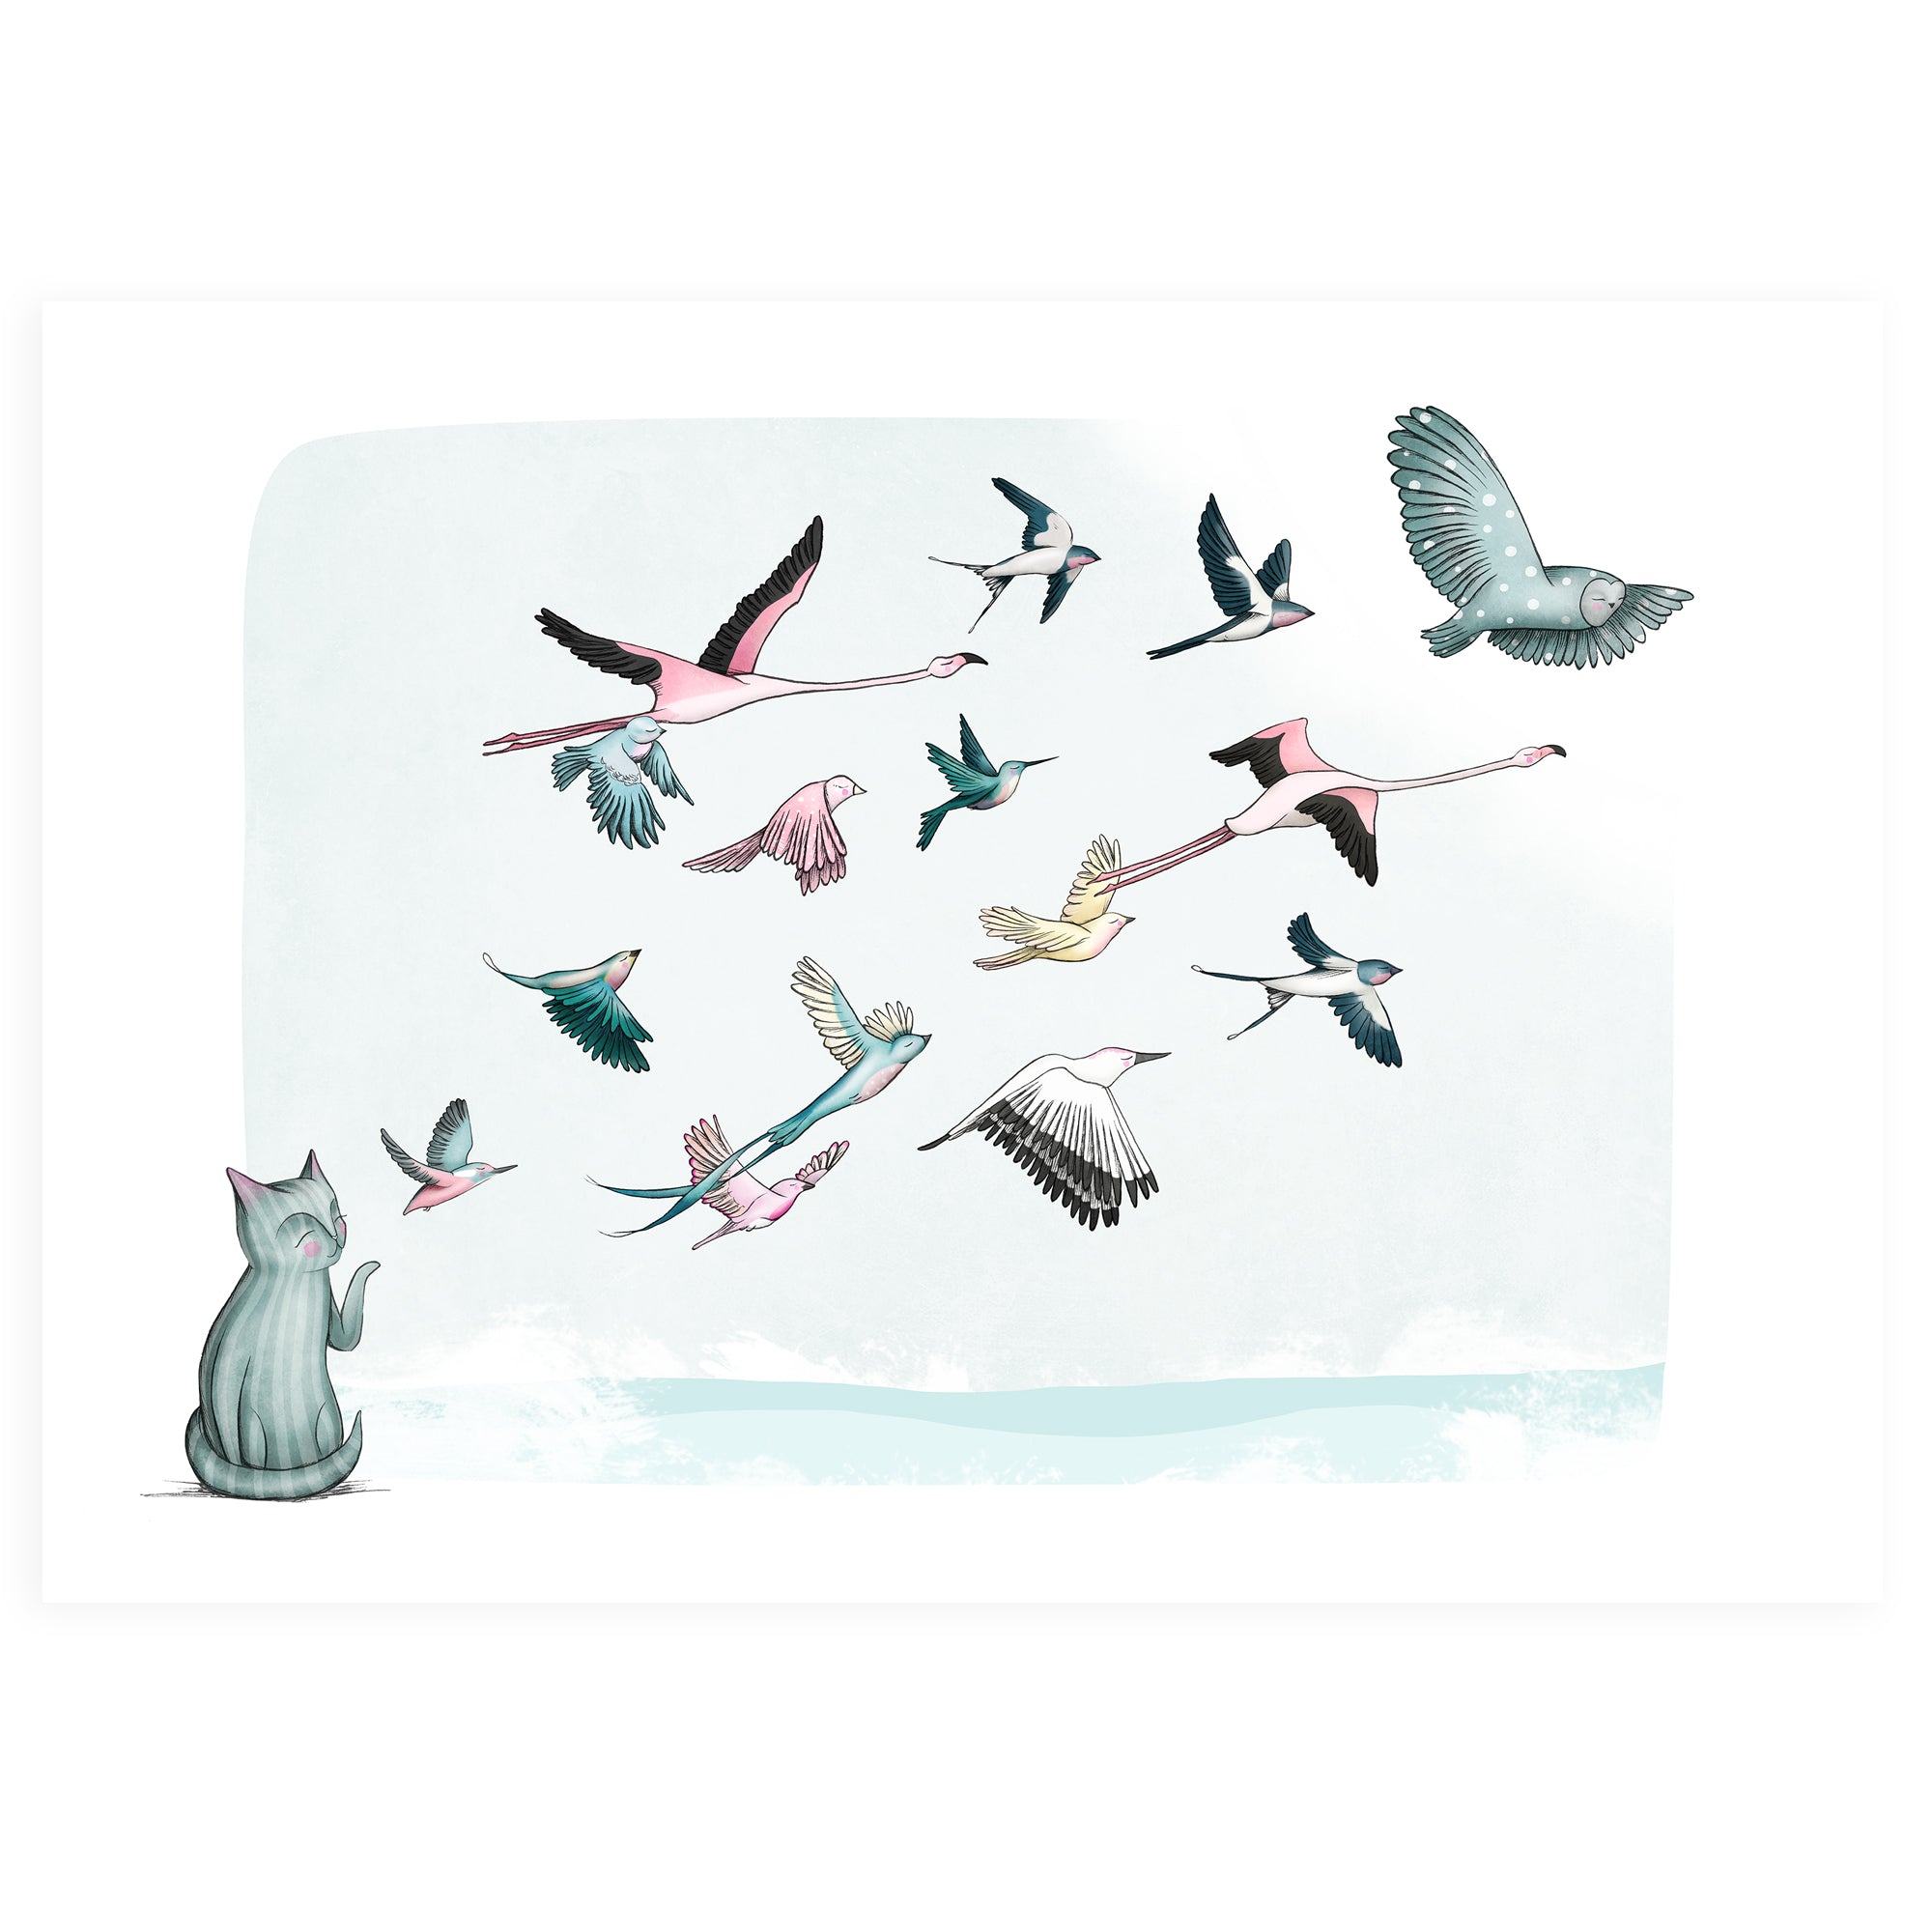 Cat Birds Print - "Freedom"